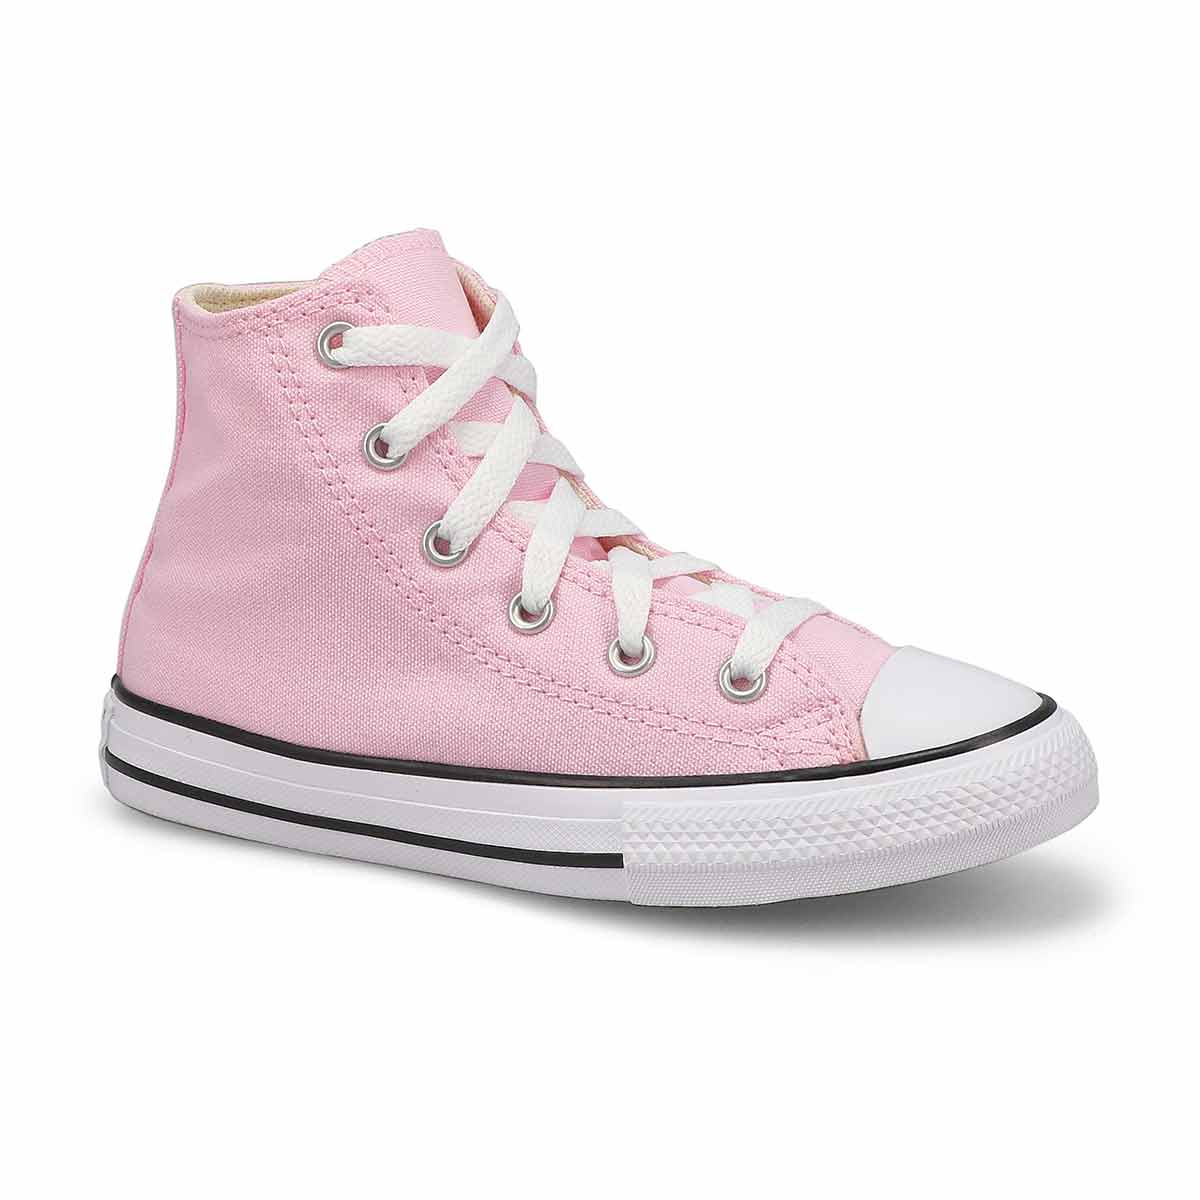 Girls Chuck Taylor All Star Hi Top Sneaker - Pink Foam/White/Black